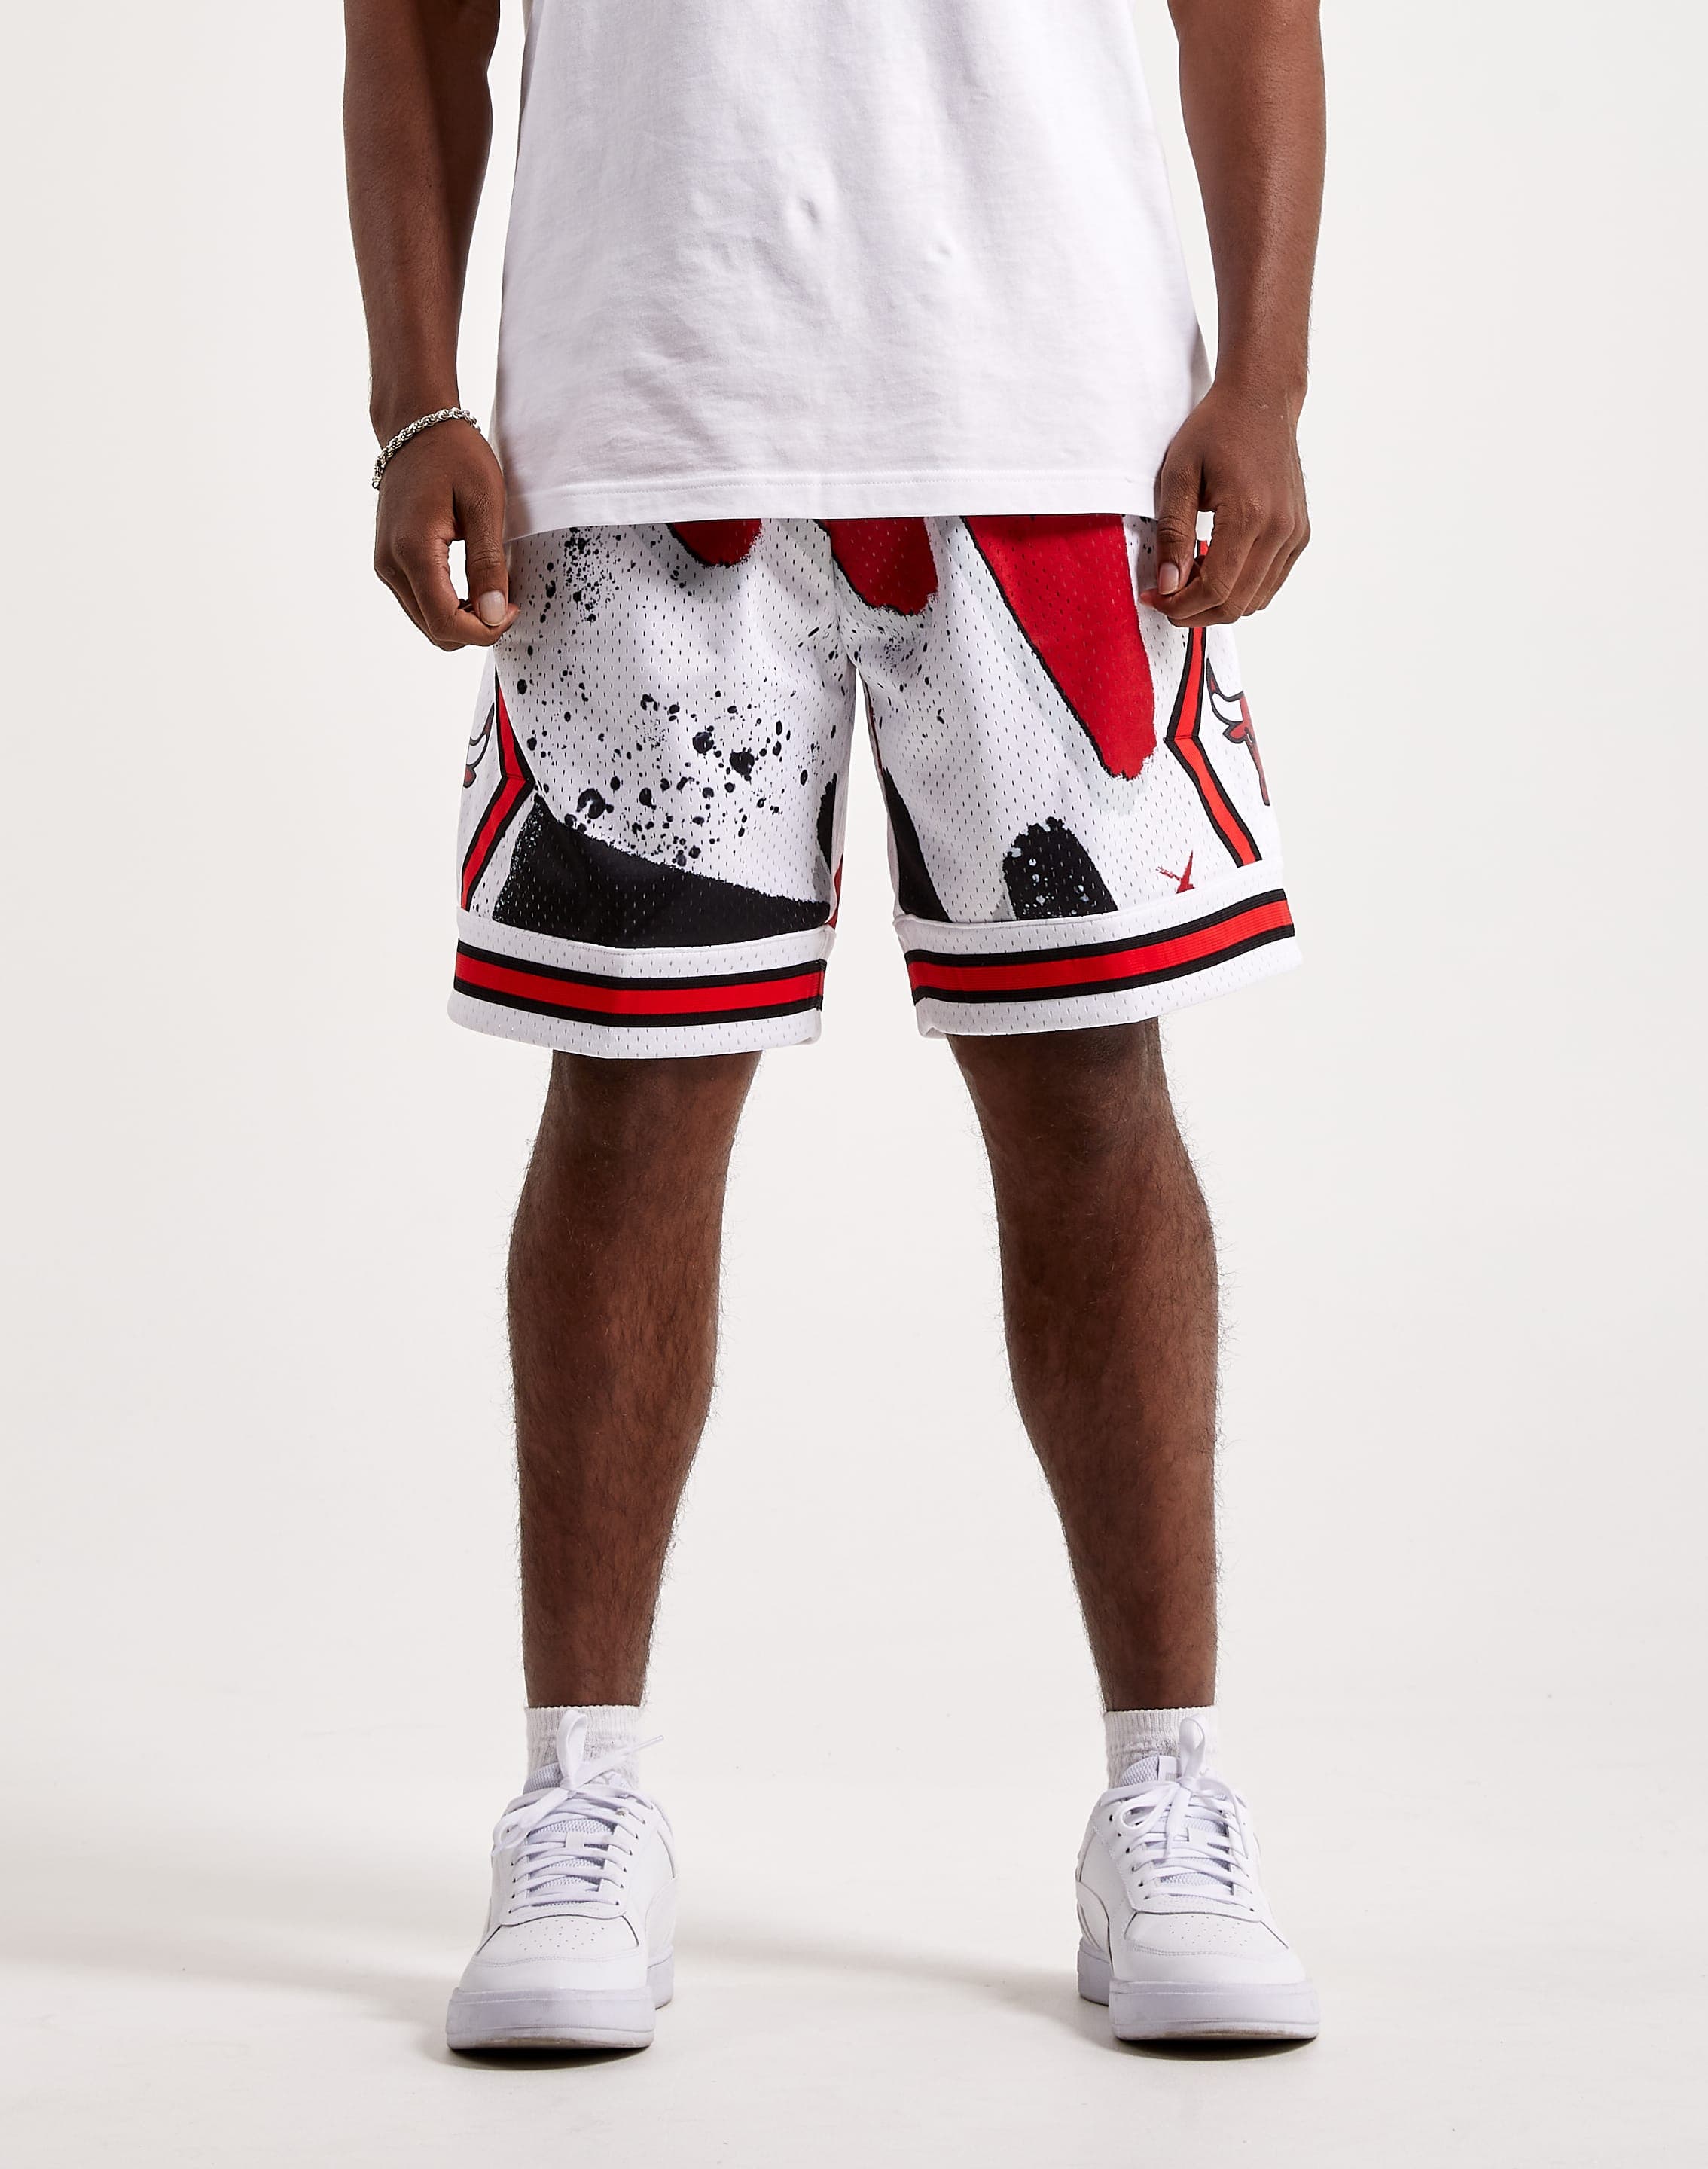 Mitchell & Ness Chicago Bulls NBA Mesh Shorts